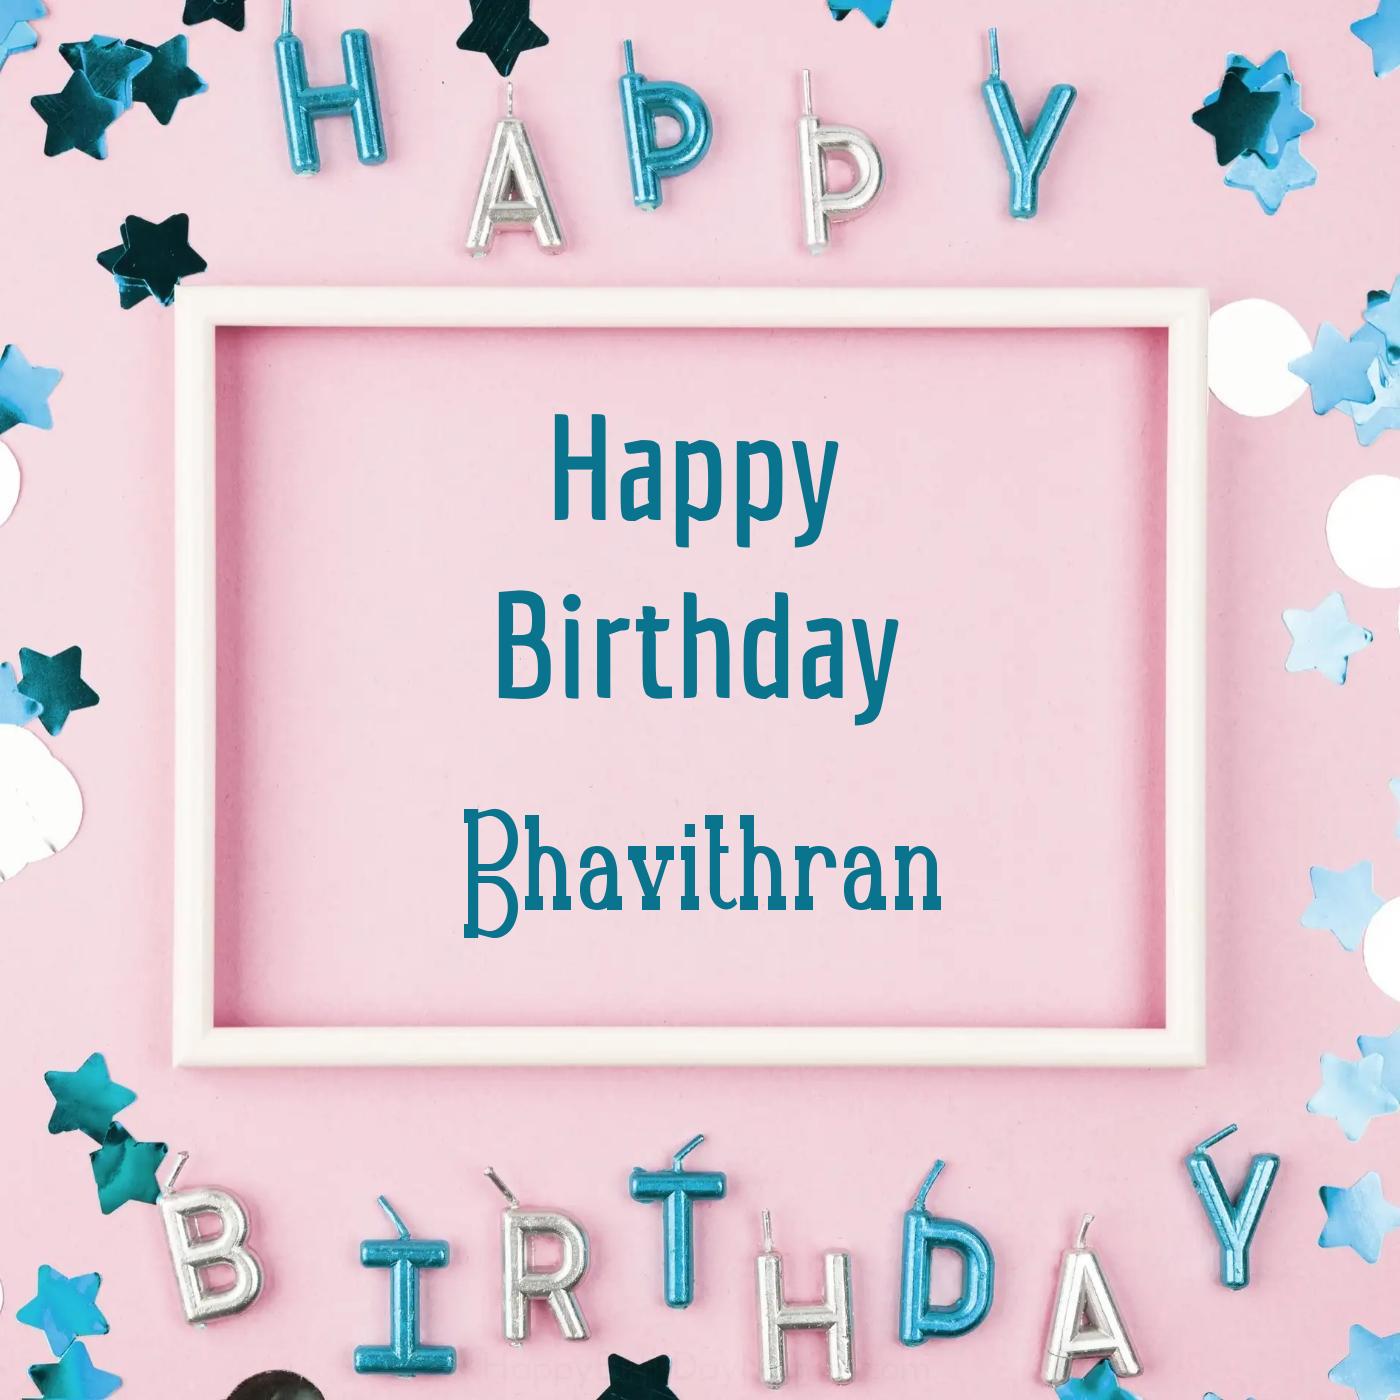 Happy Birthday Bhavithran Pink Frame Card